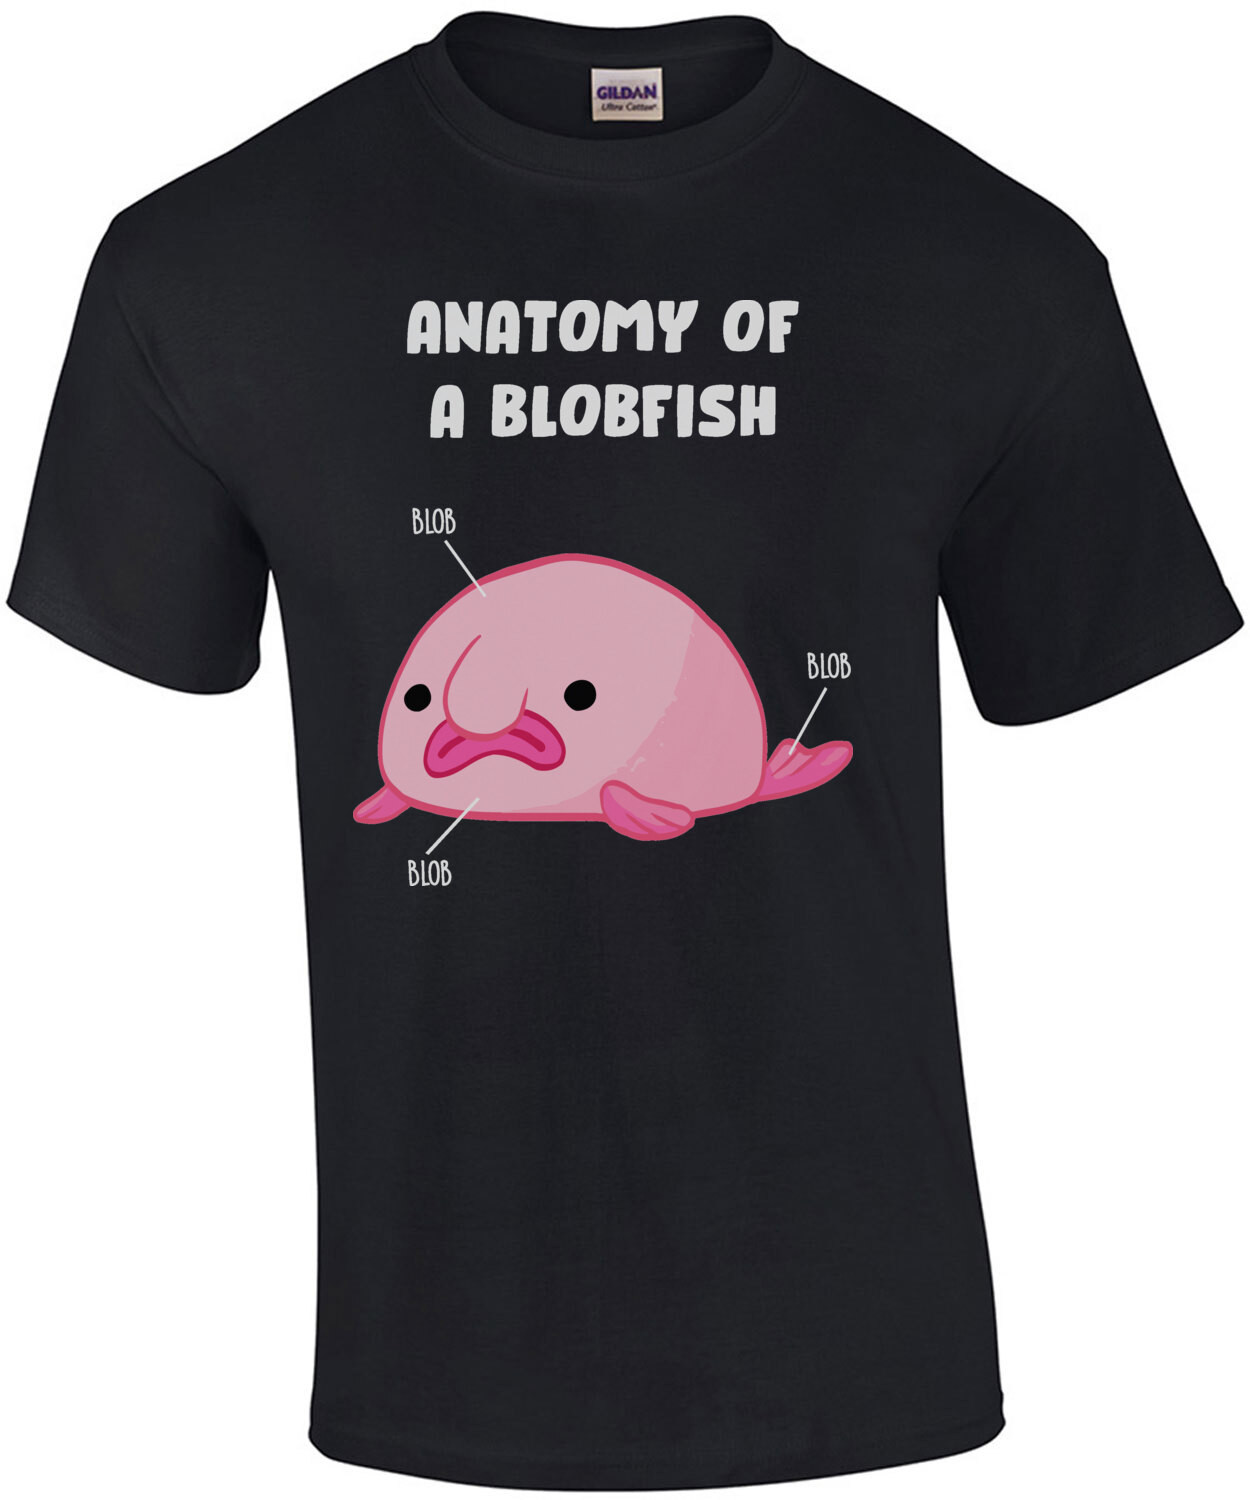 Anatomy of a blobfish - funny t-shirt